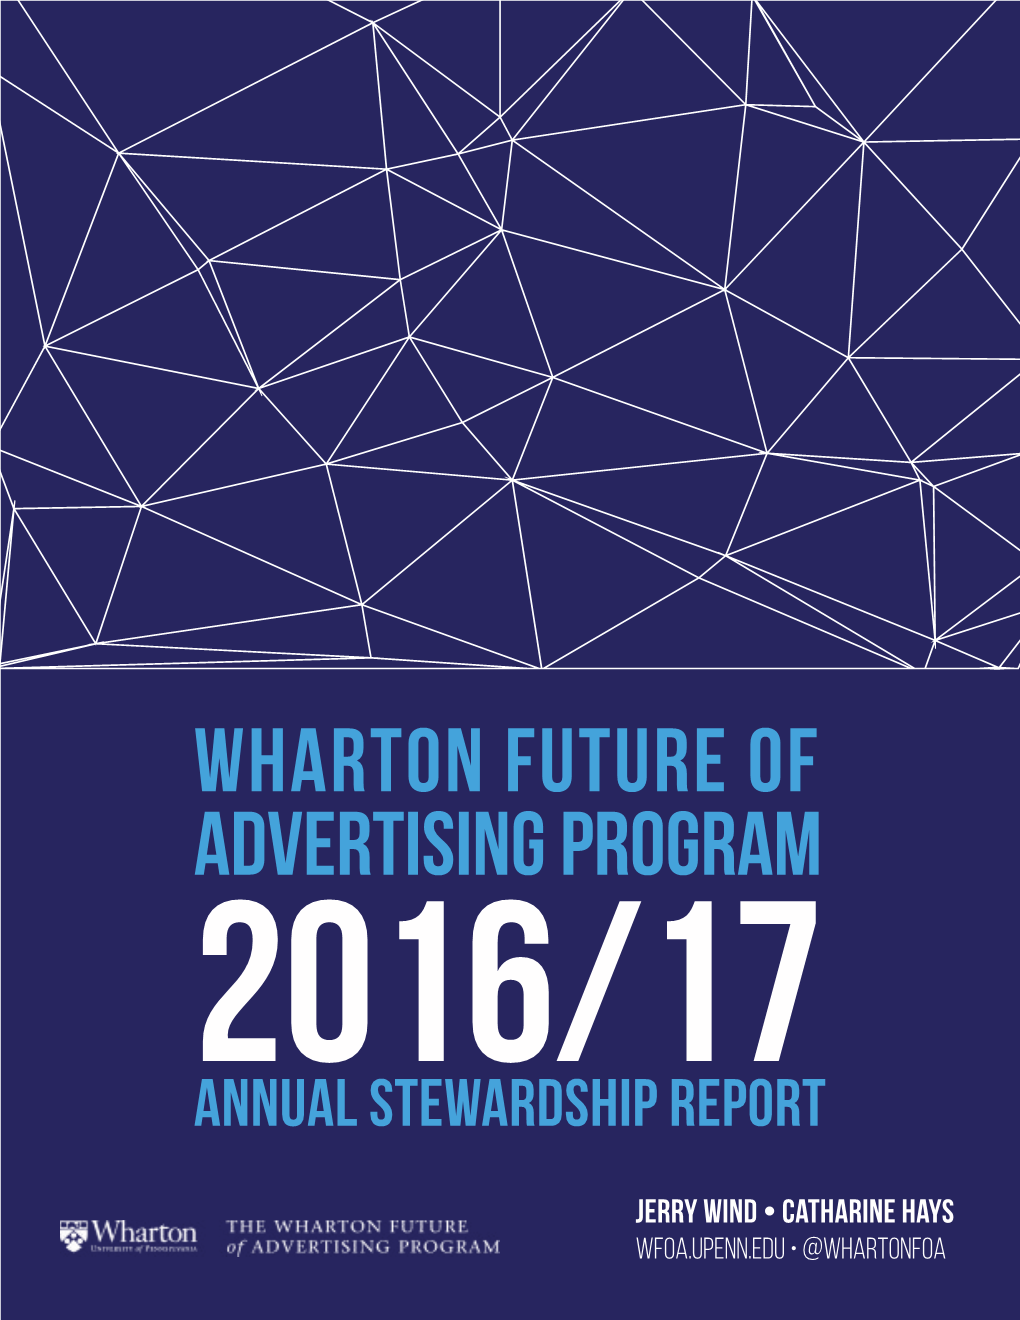 Wharton Future of Advertising Program 2016/17 Annual Stewardship Report